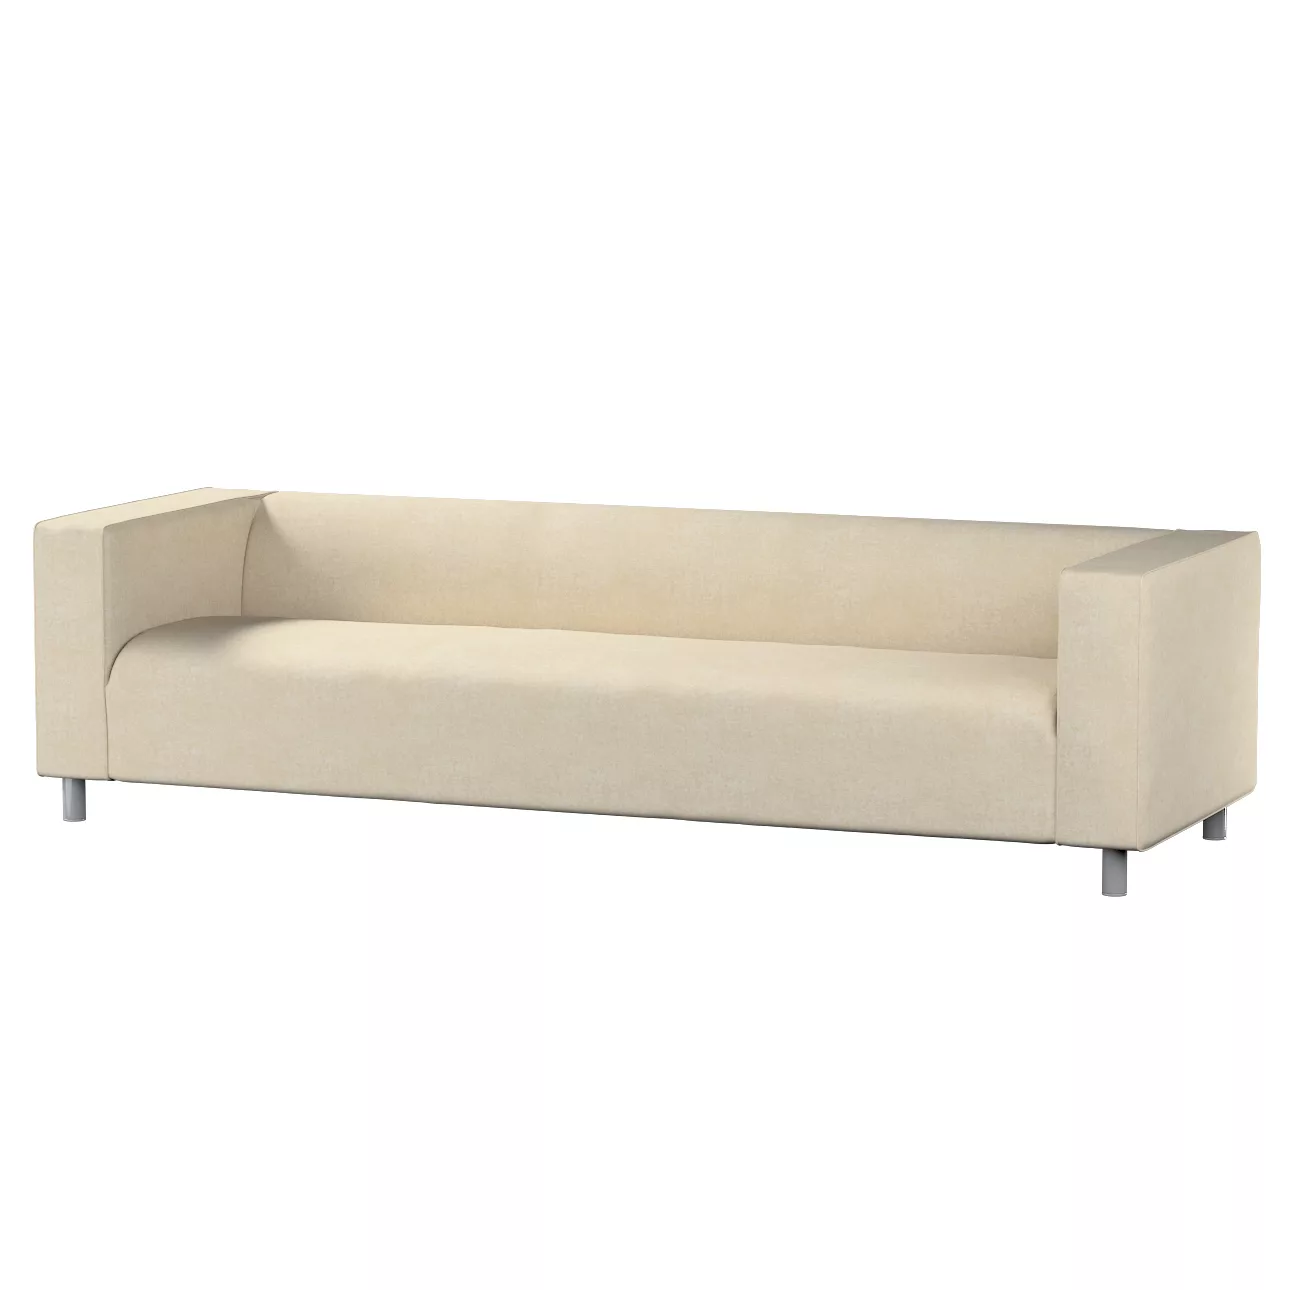 Bezug für Klippan 4-Sitzer Sofa, grau-beige, Bezug für Klippan 4-Sitzer, Ch günstig online kaufen